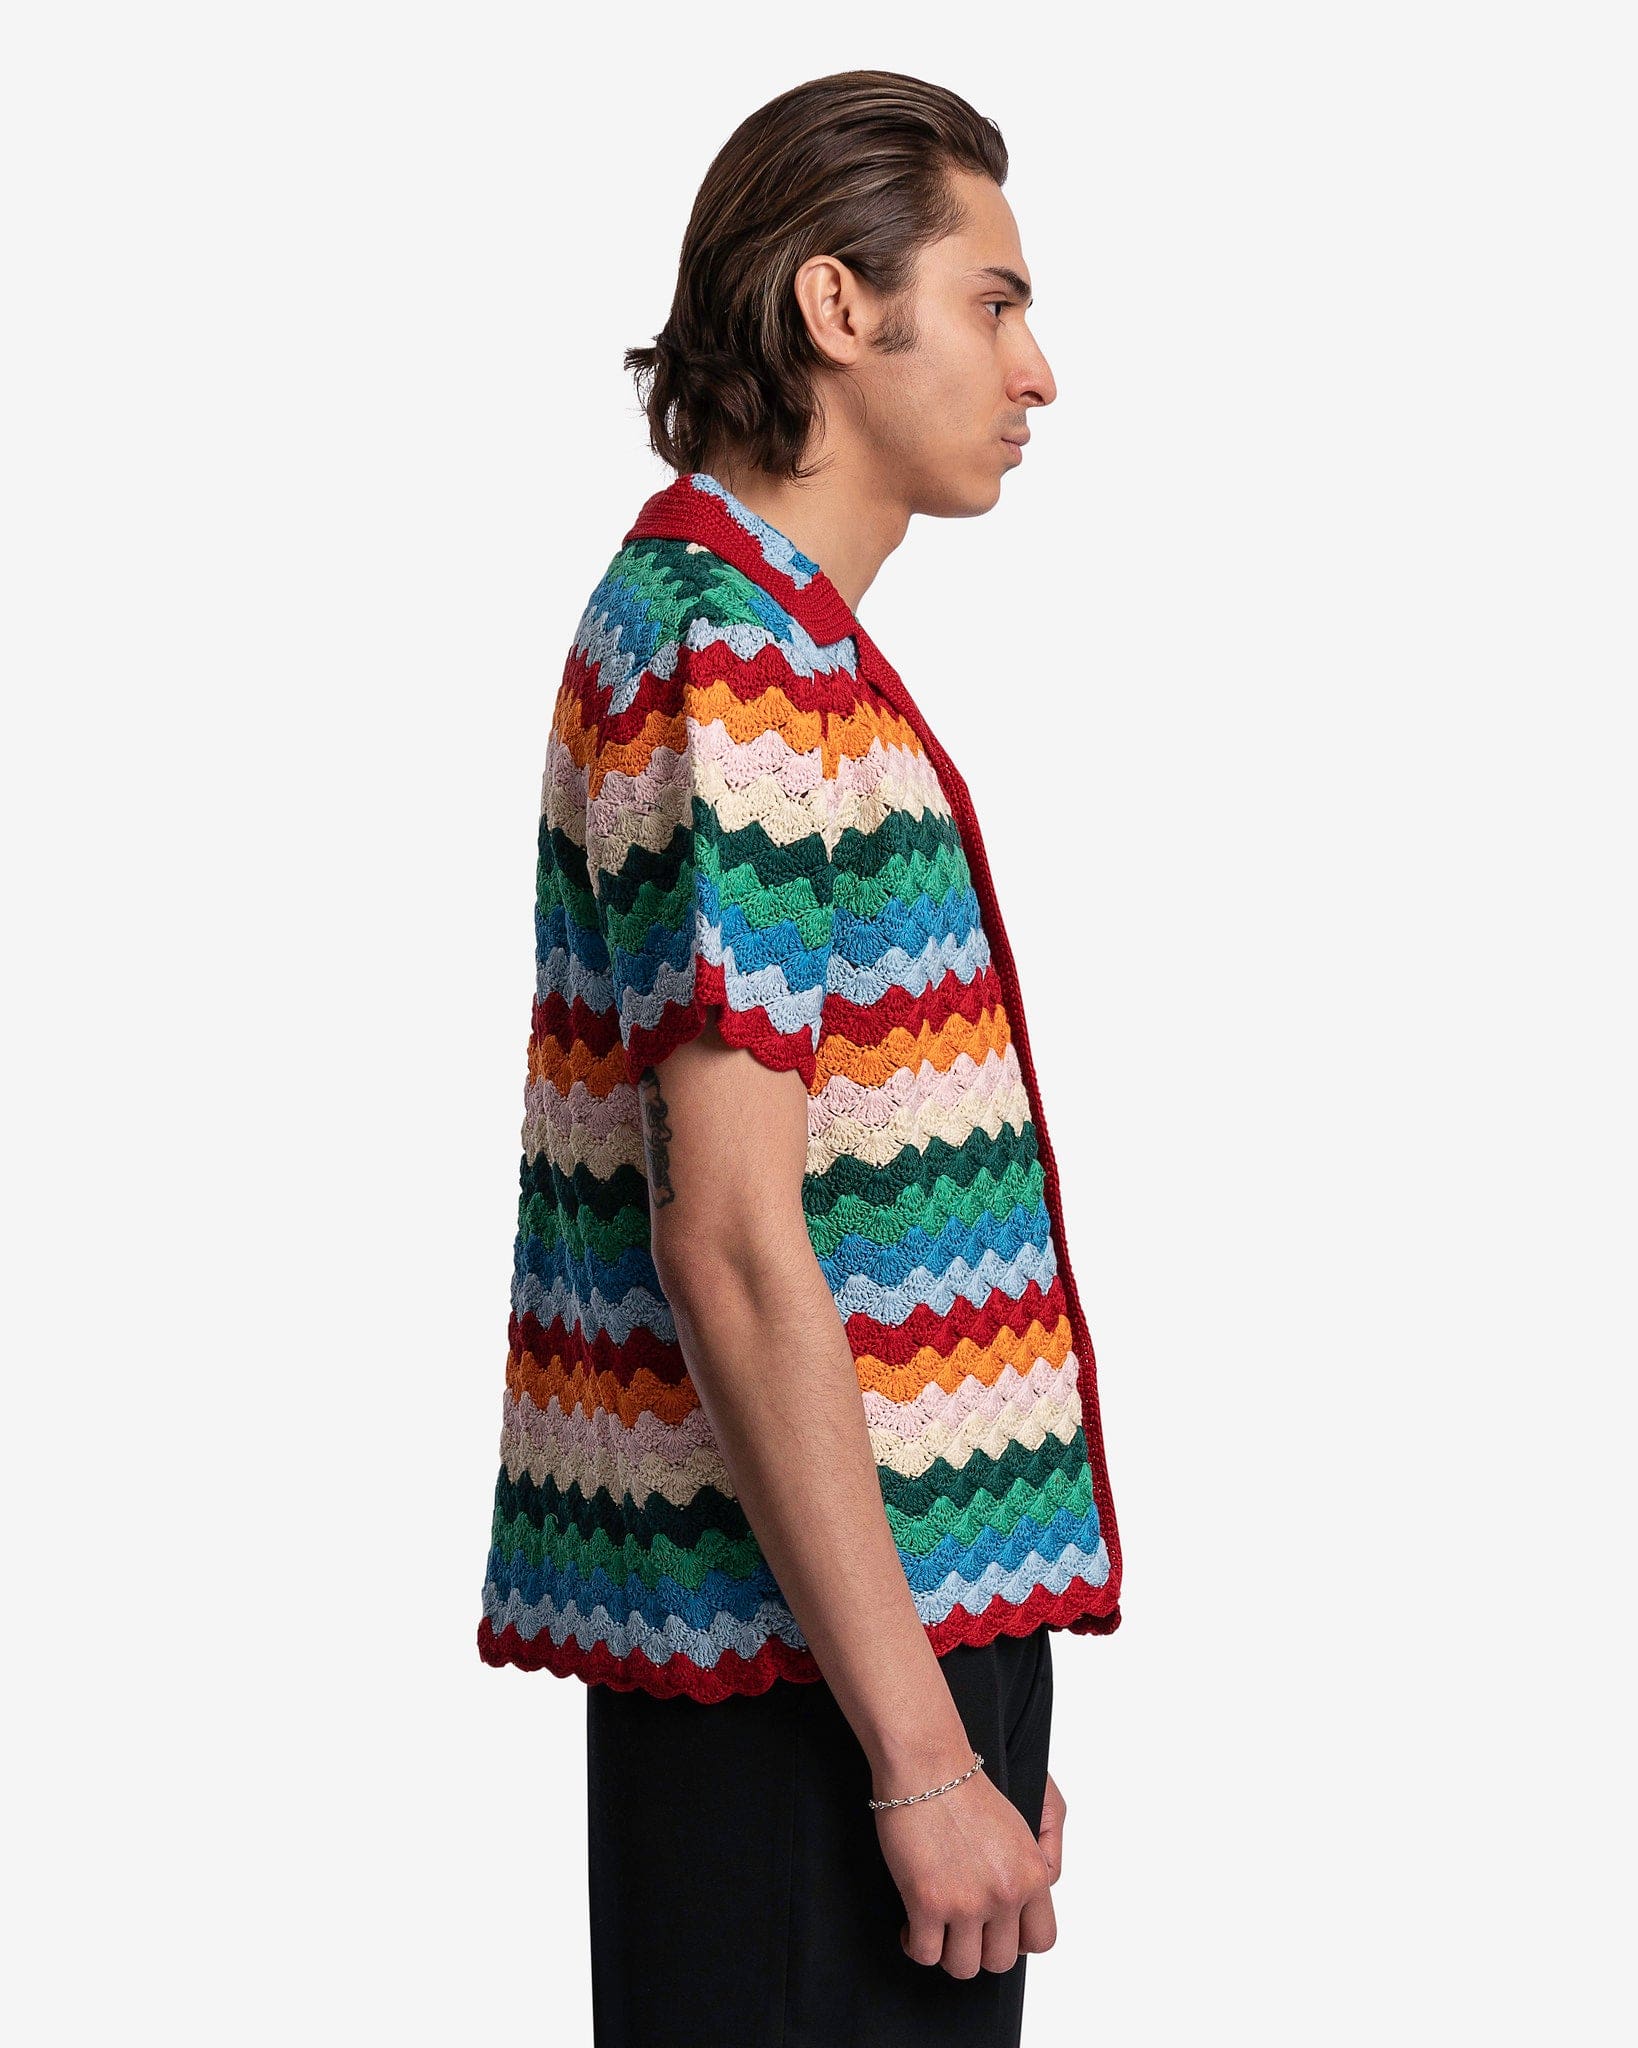 Casablanca Men's Shirts Shell Crochet Shirt in Rainbow Multi